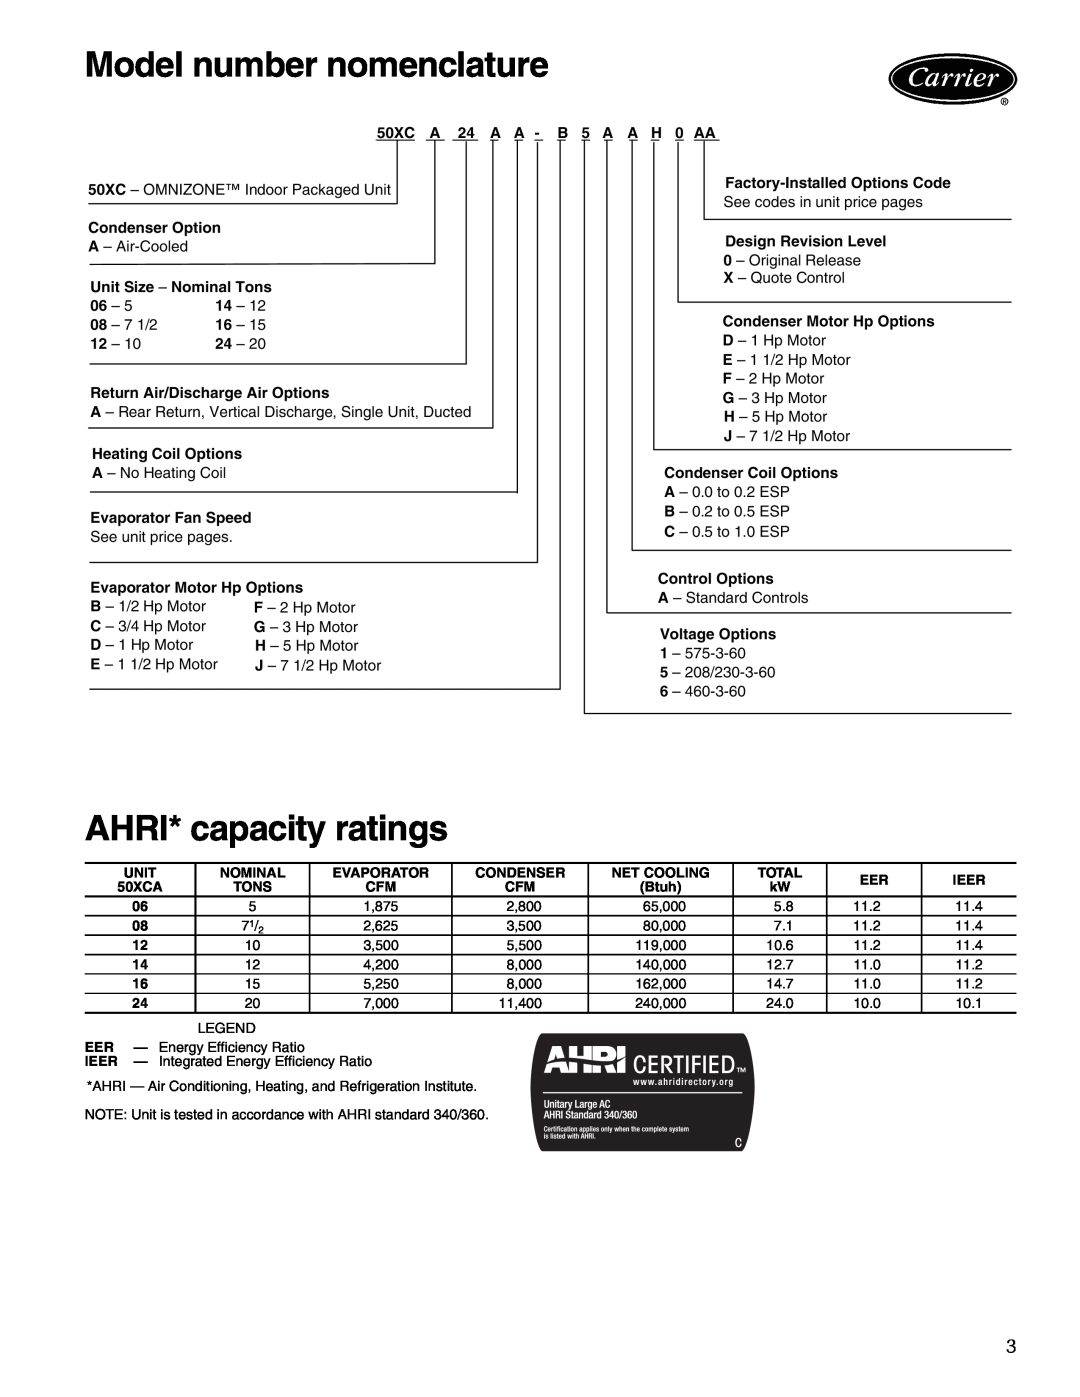 Carrier 50XCA06-24 manual Model number nomenclature, AHRI* capacity ratings, a50-8500 